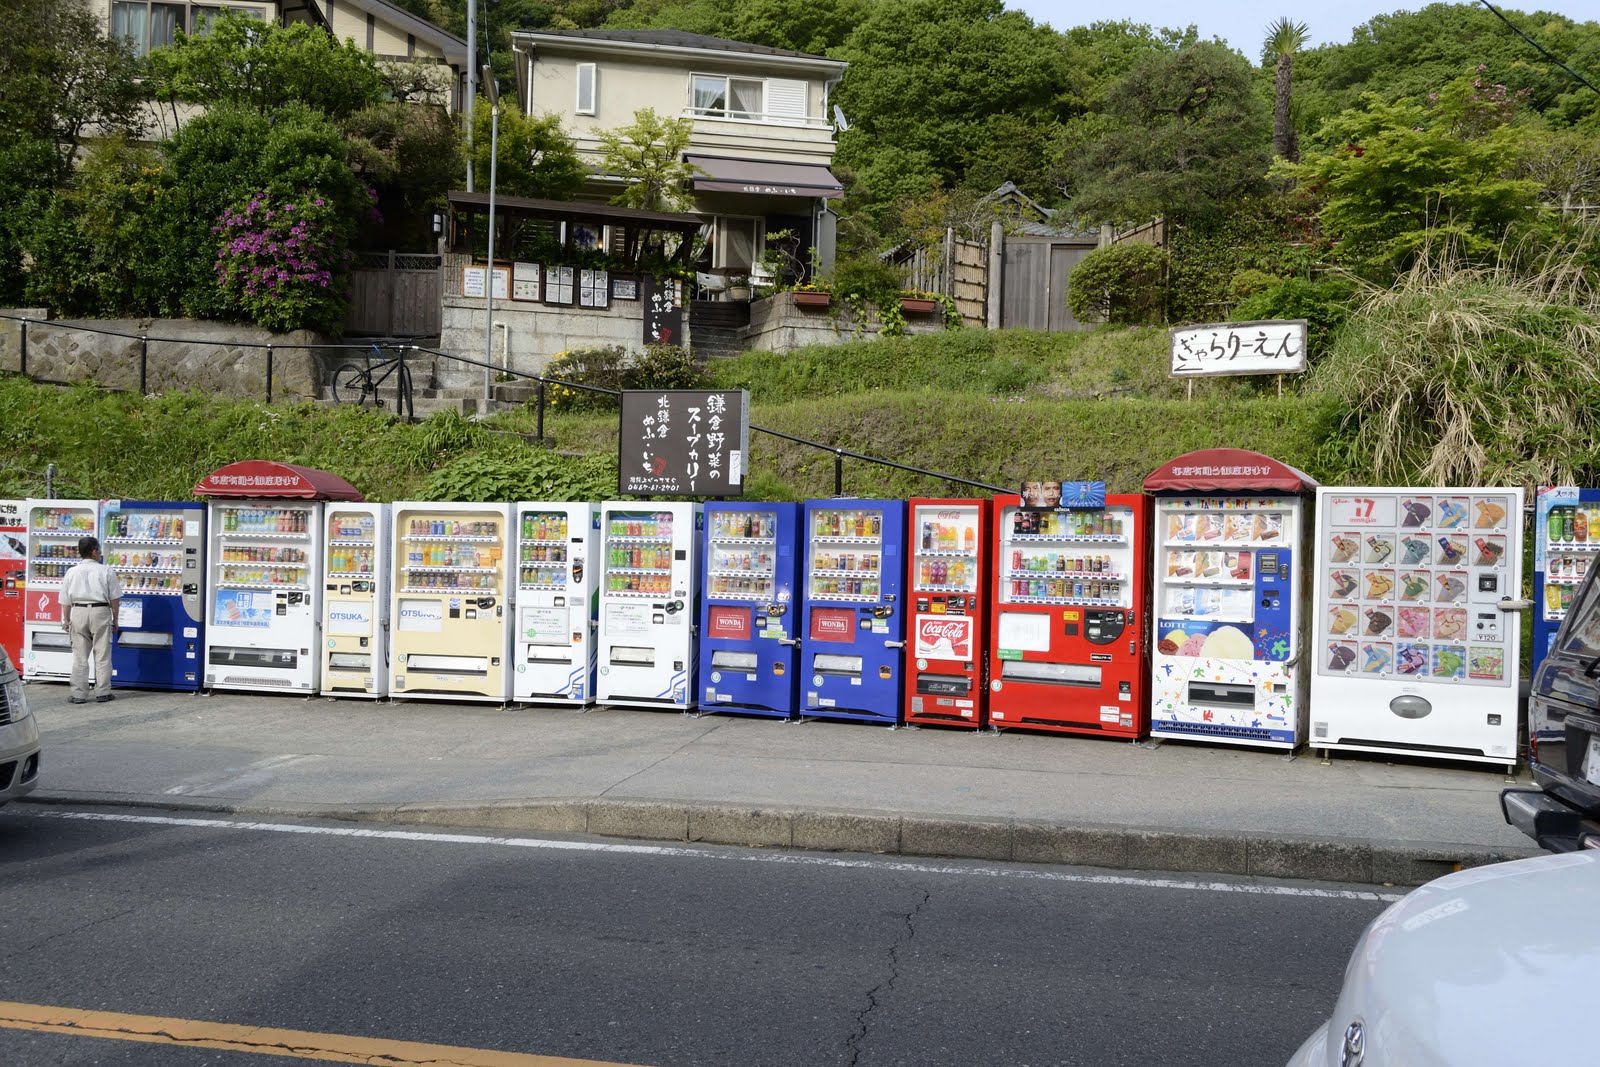 Japanese vending machines row